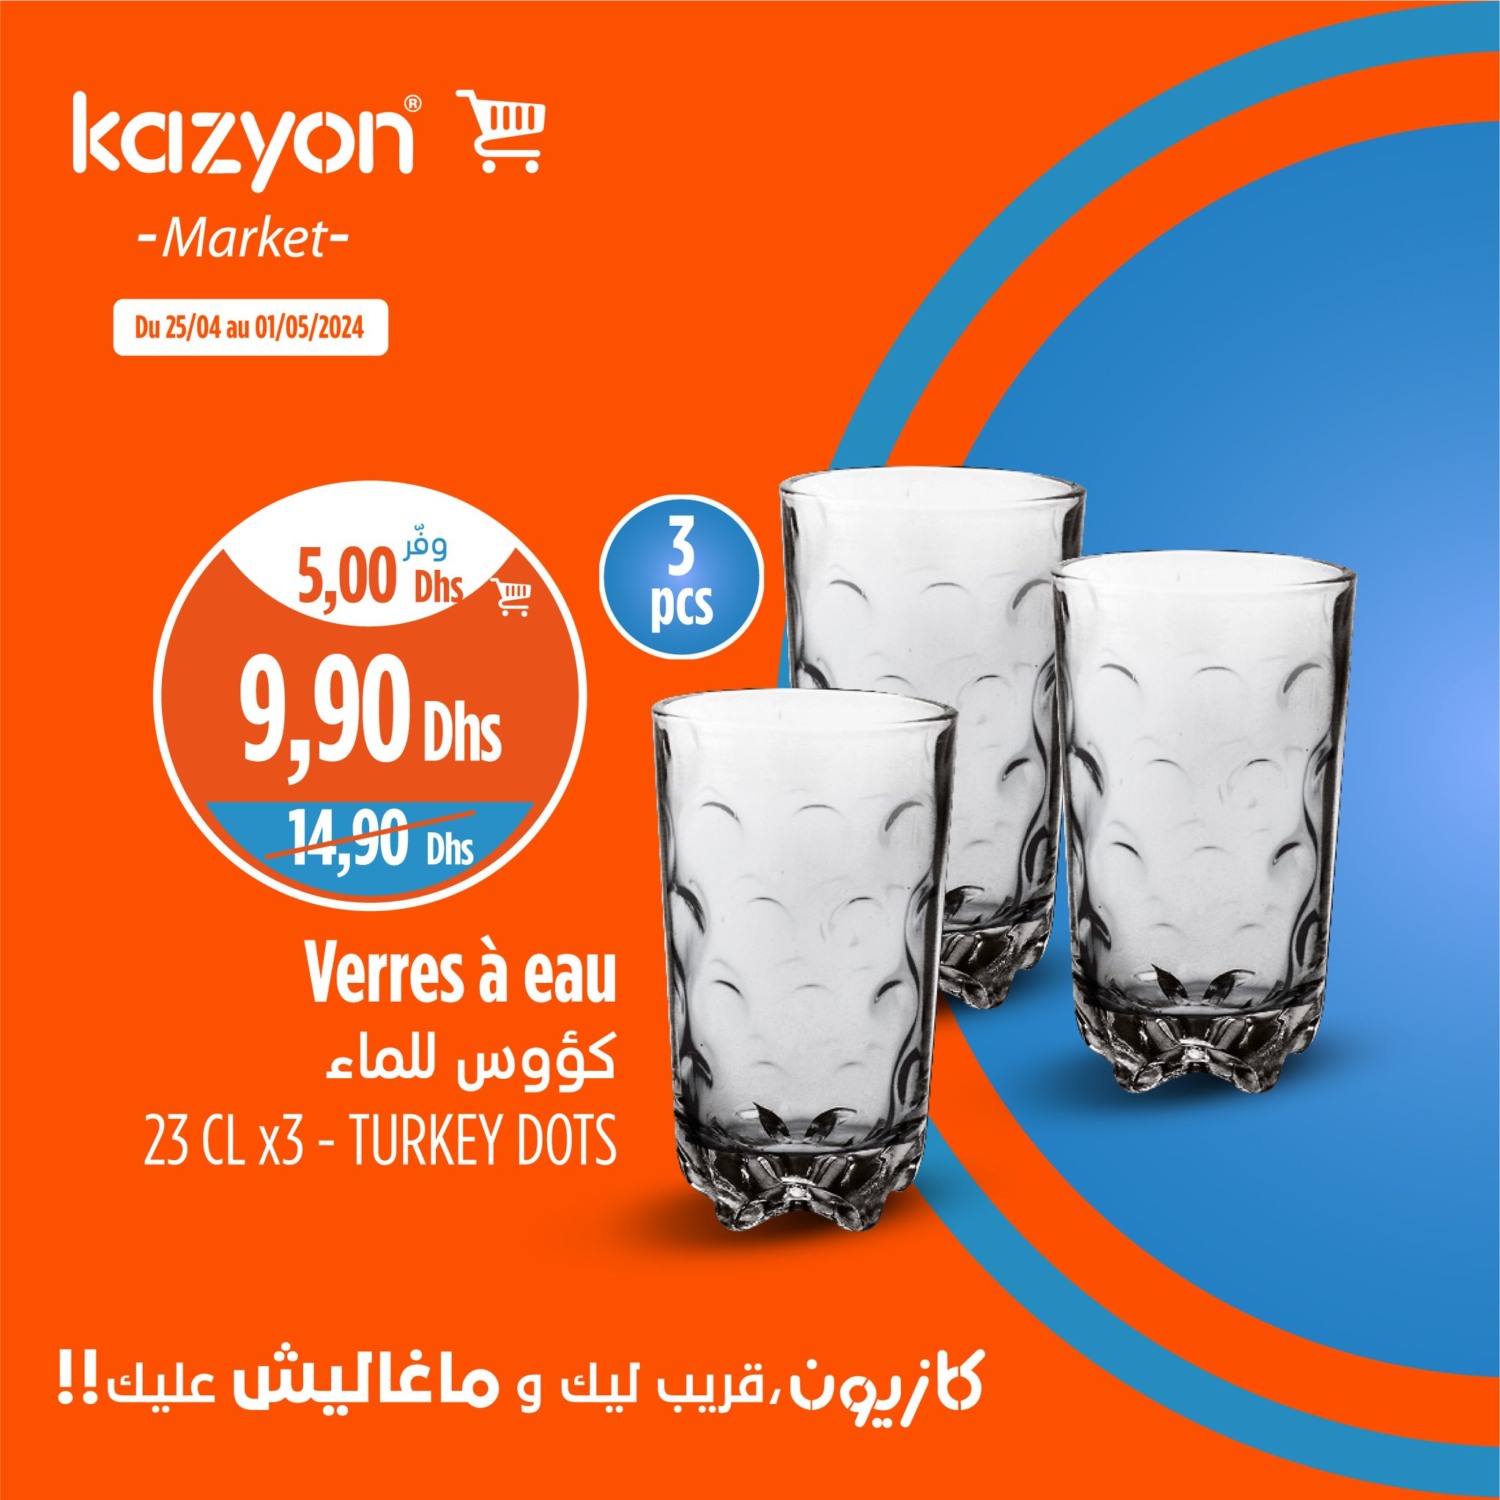 kazyon maroc 25 avril 1 mai promotion